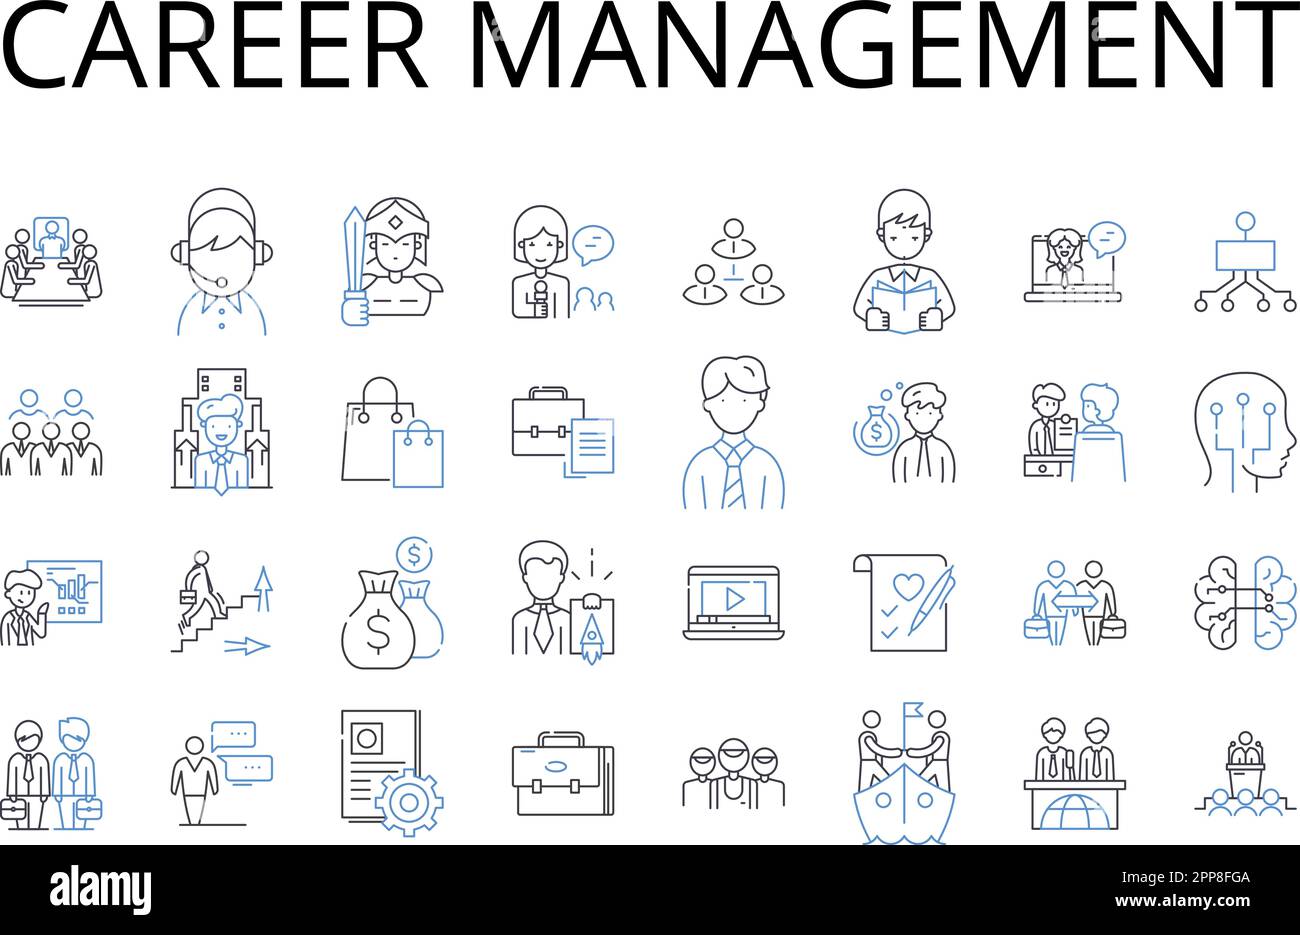 Career Management Line Icons Collection Job Development Work Progress